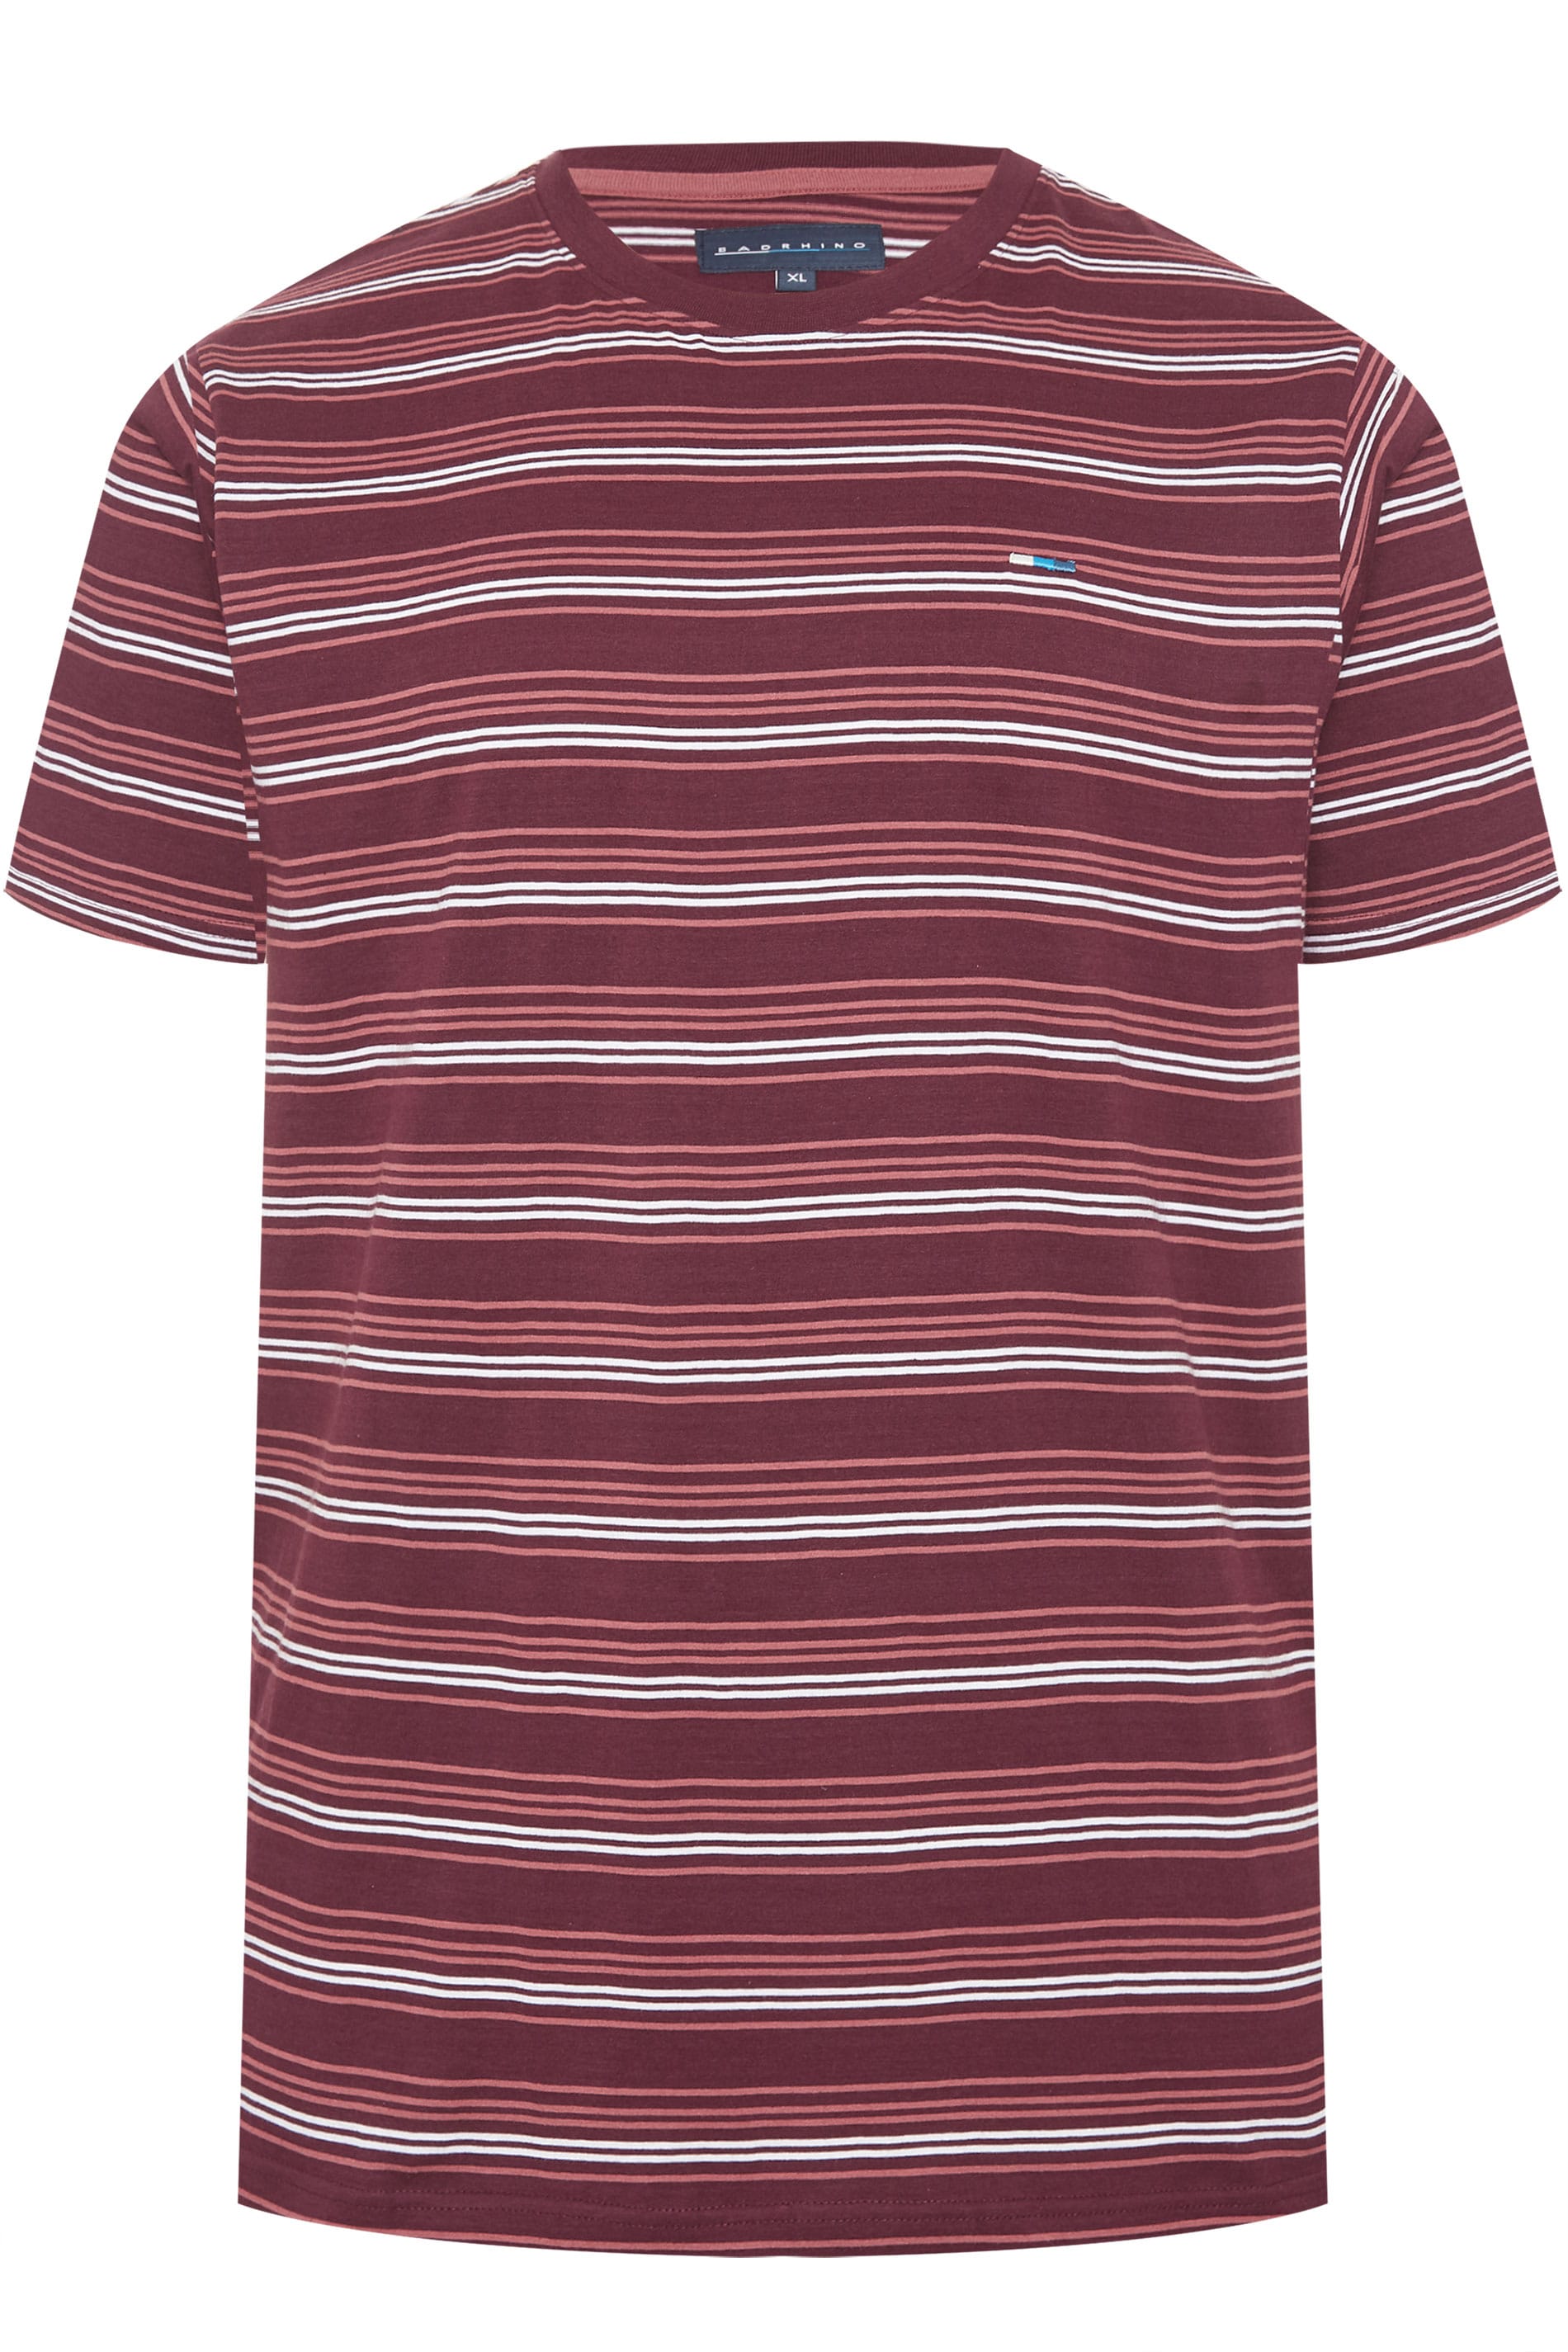 BadRhino Burgundy & White Stripe T-Shirt_c91e.jpg